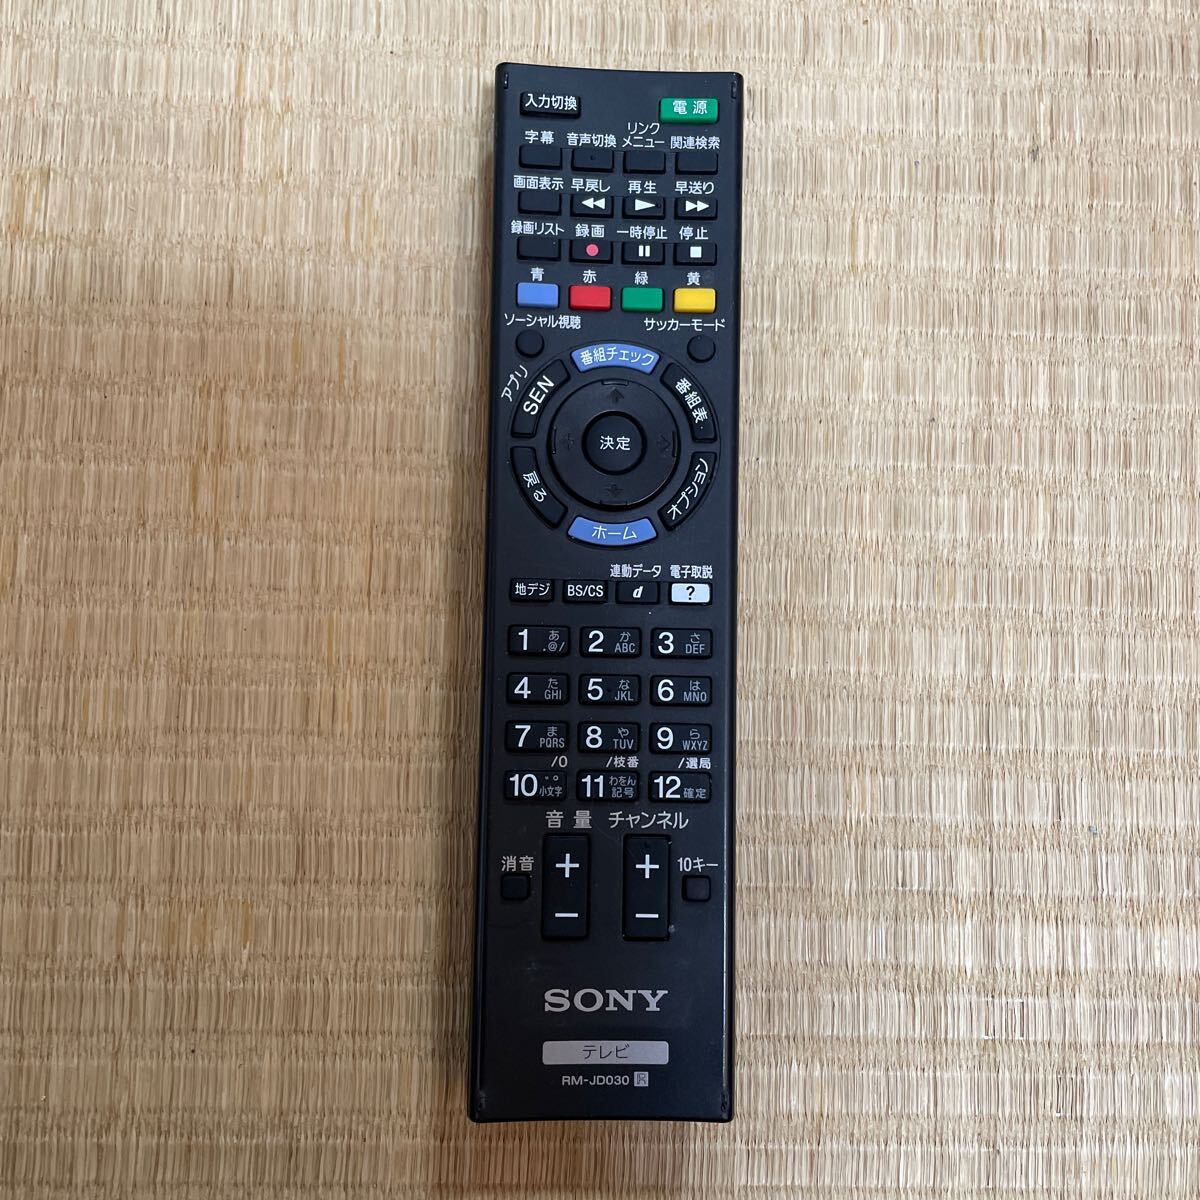  operation verification ending [SONY]*RM-JD030* TV tv remote control Sony 